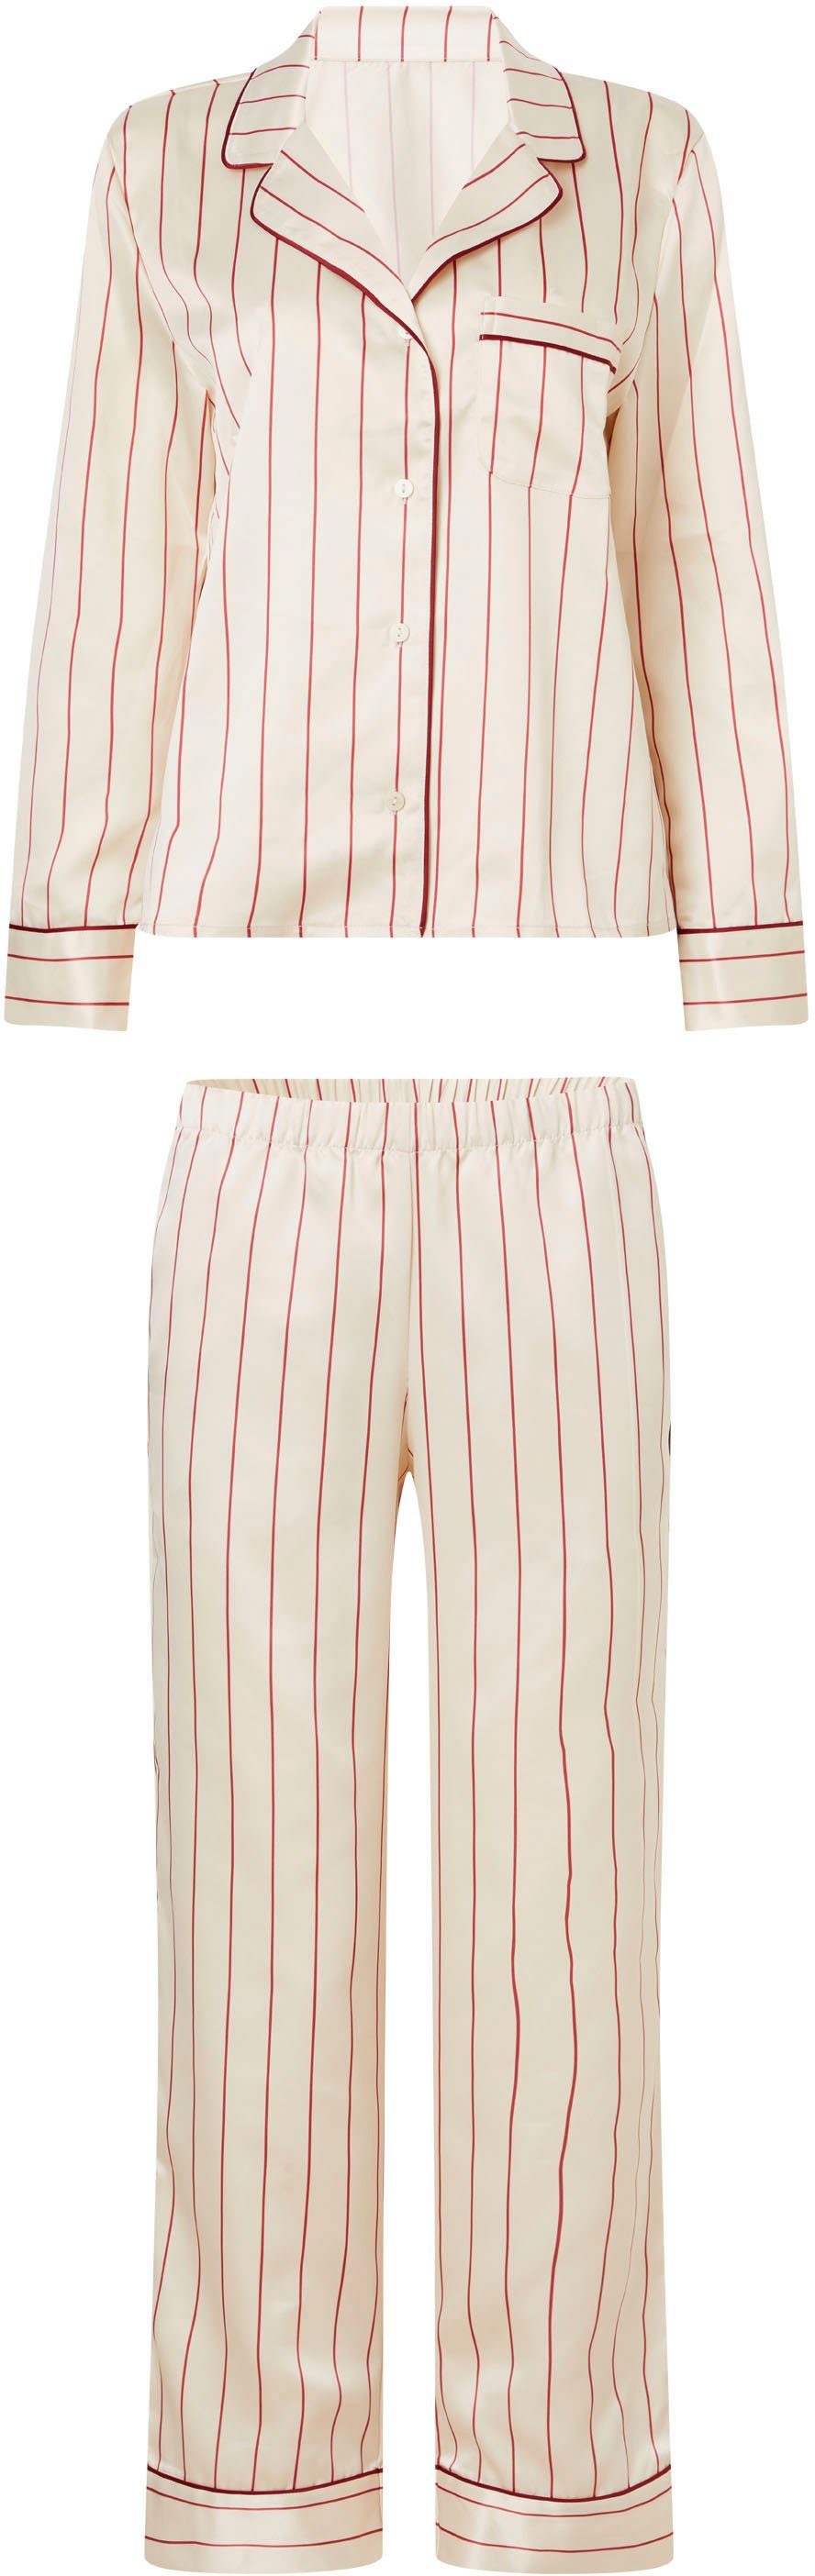 Klein 3 SET & Underwear L/S PANT Calvin (Set, im Schlafmaske Set Pyjama Stück) Pyjama